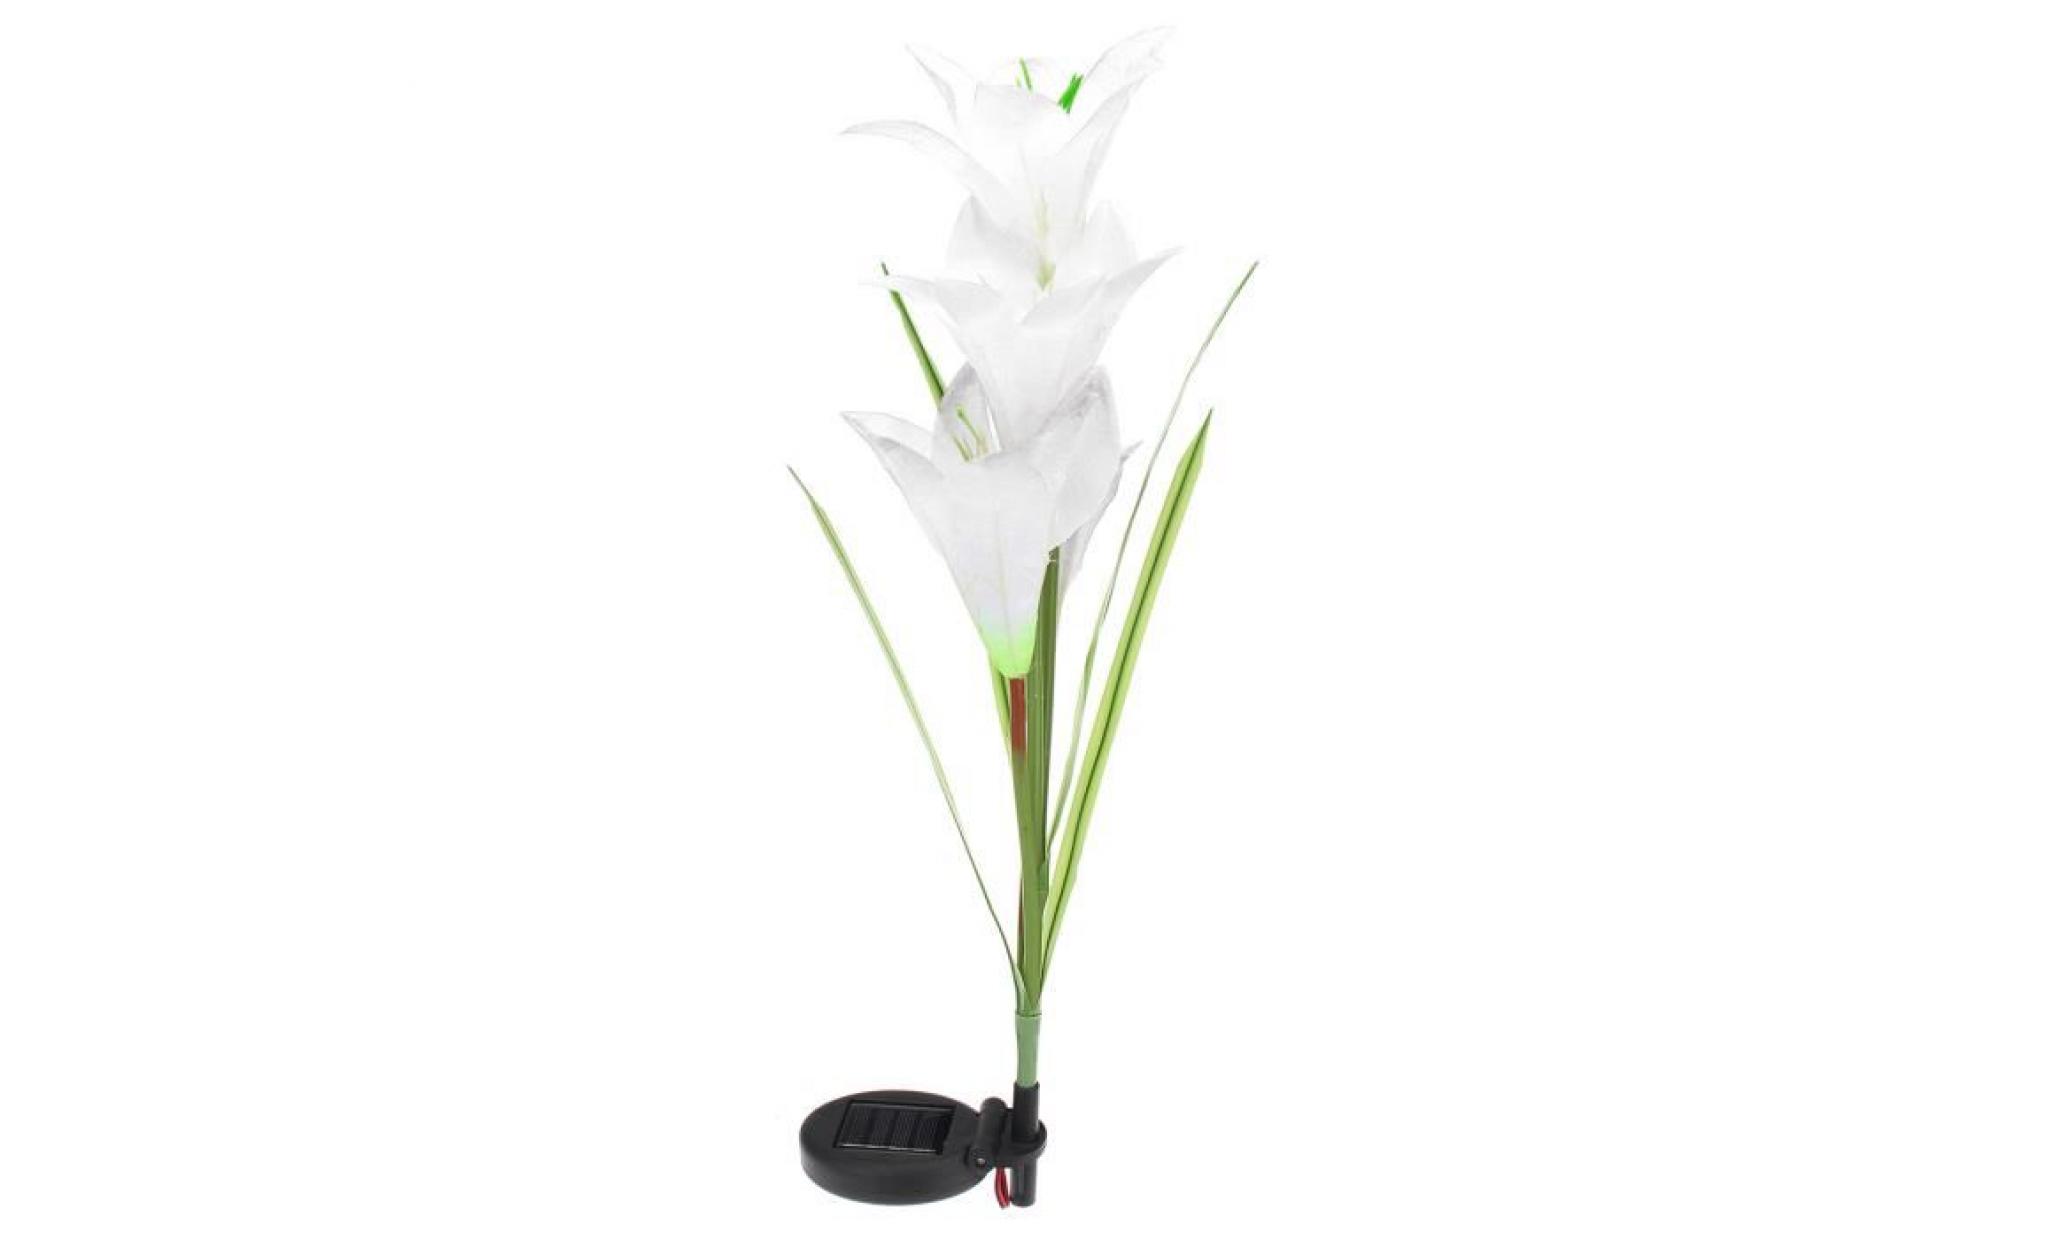 neufu lily flower garden powered solaire stake lumières fleurs artificielles 4 led blanc